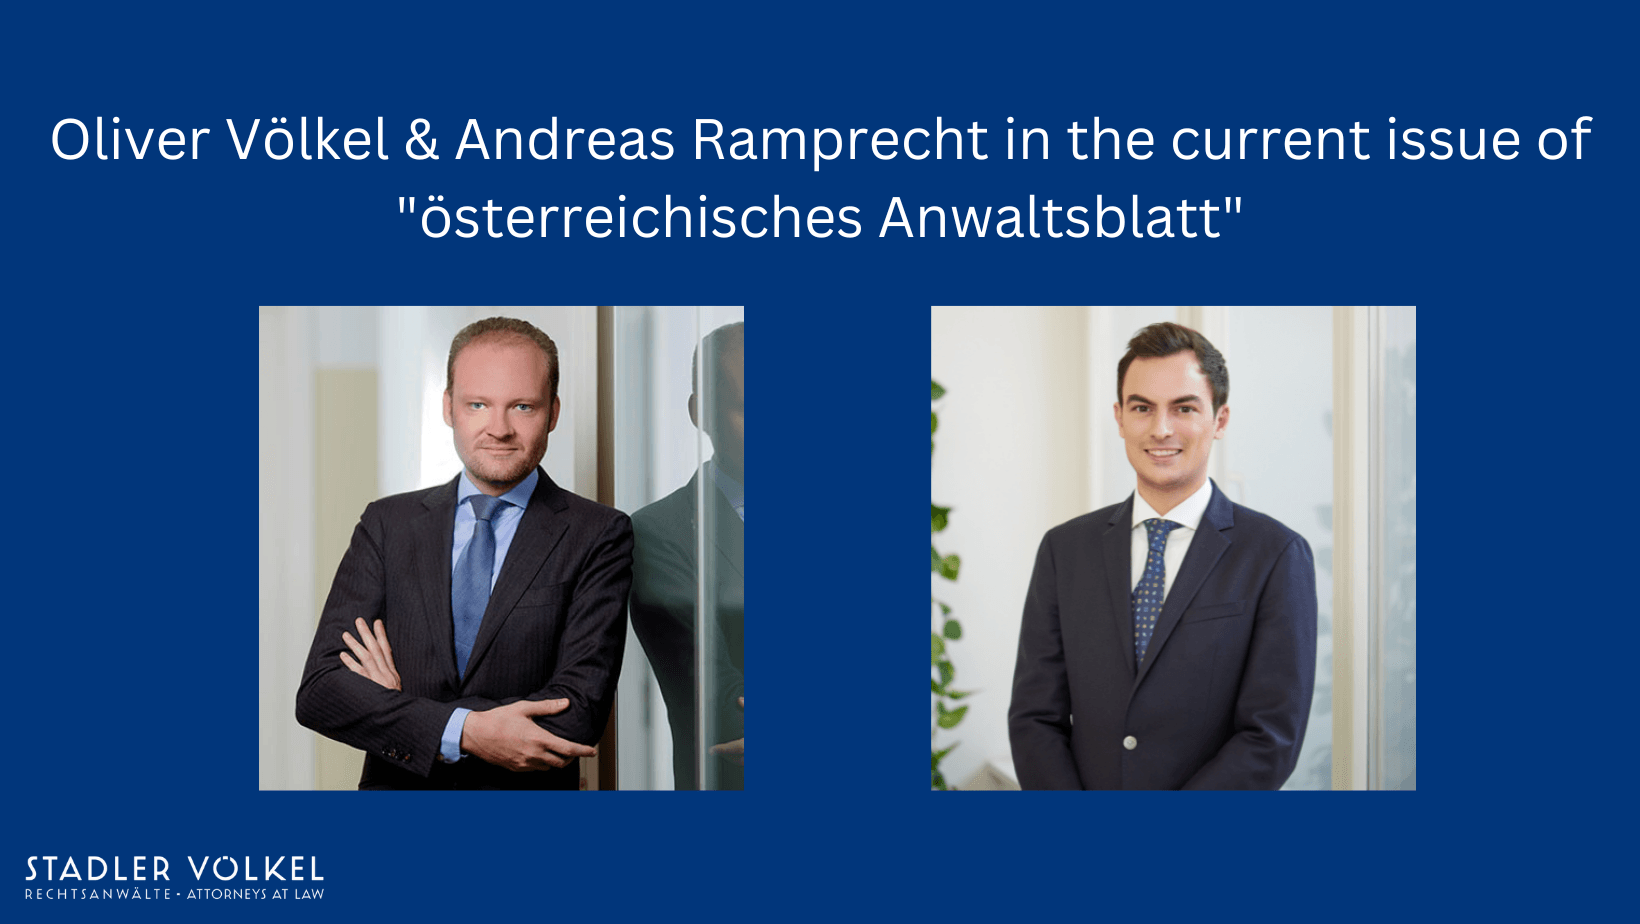 Oliver Völkel and Andreas Ramprecht in the current issue of "österreichisches Anwaltsblatt"